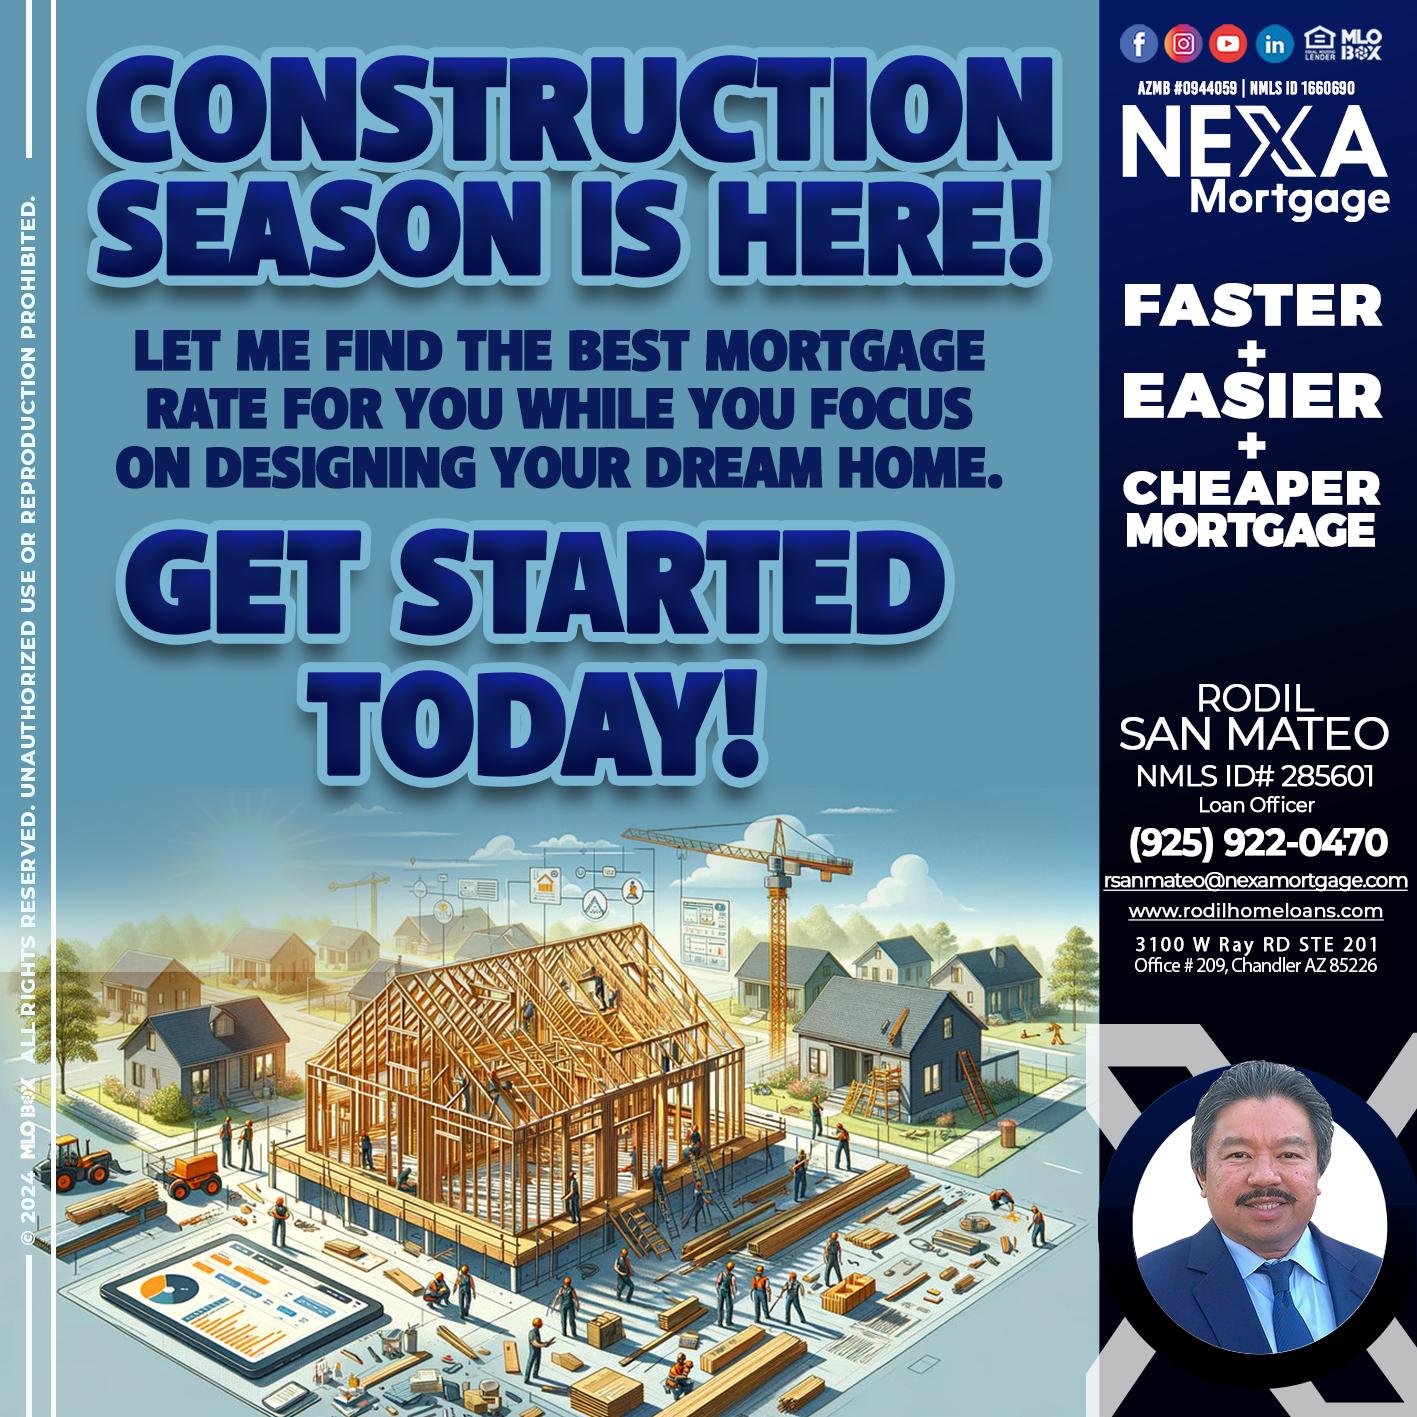 CONSTRUCTION - Rodil San Mateo -Loan Officer